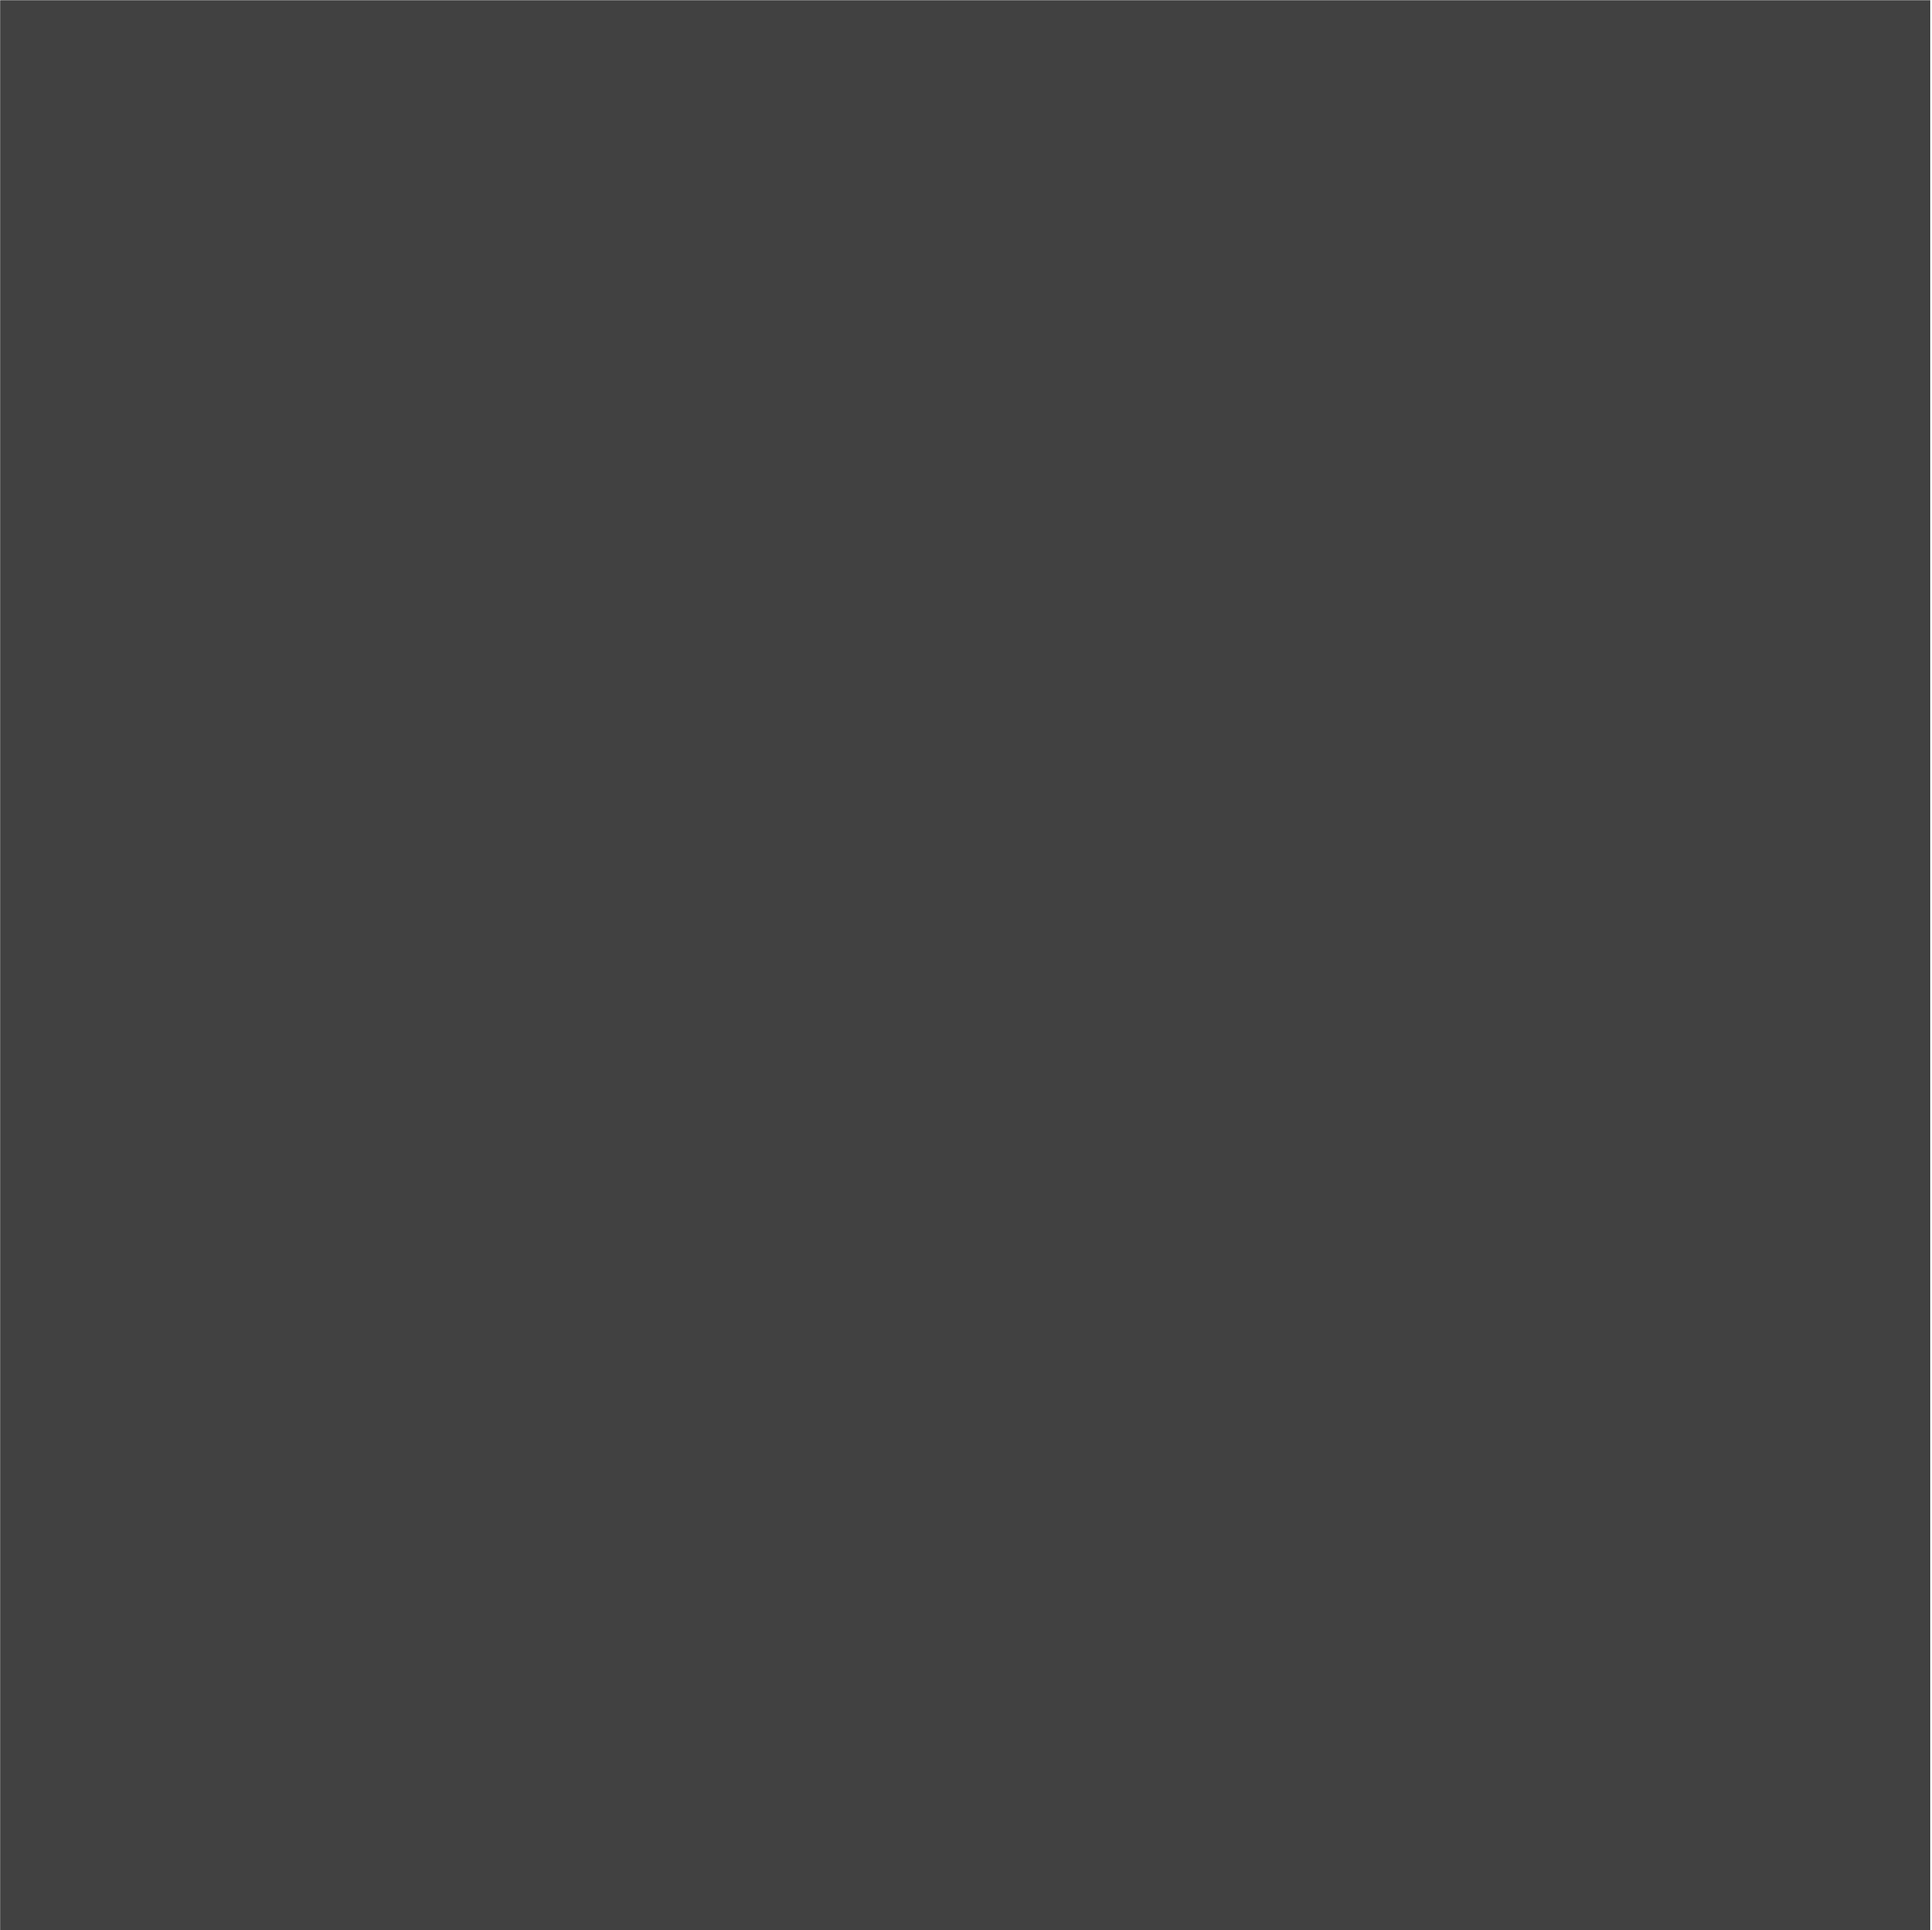 Image of PowderCoat Dulux Duralloy Black Gloss